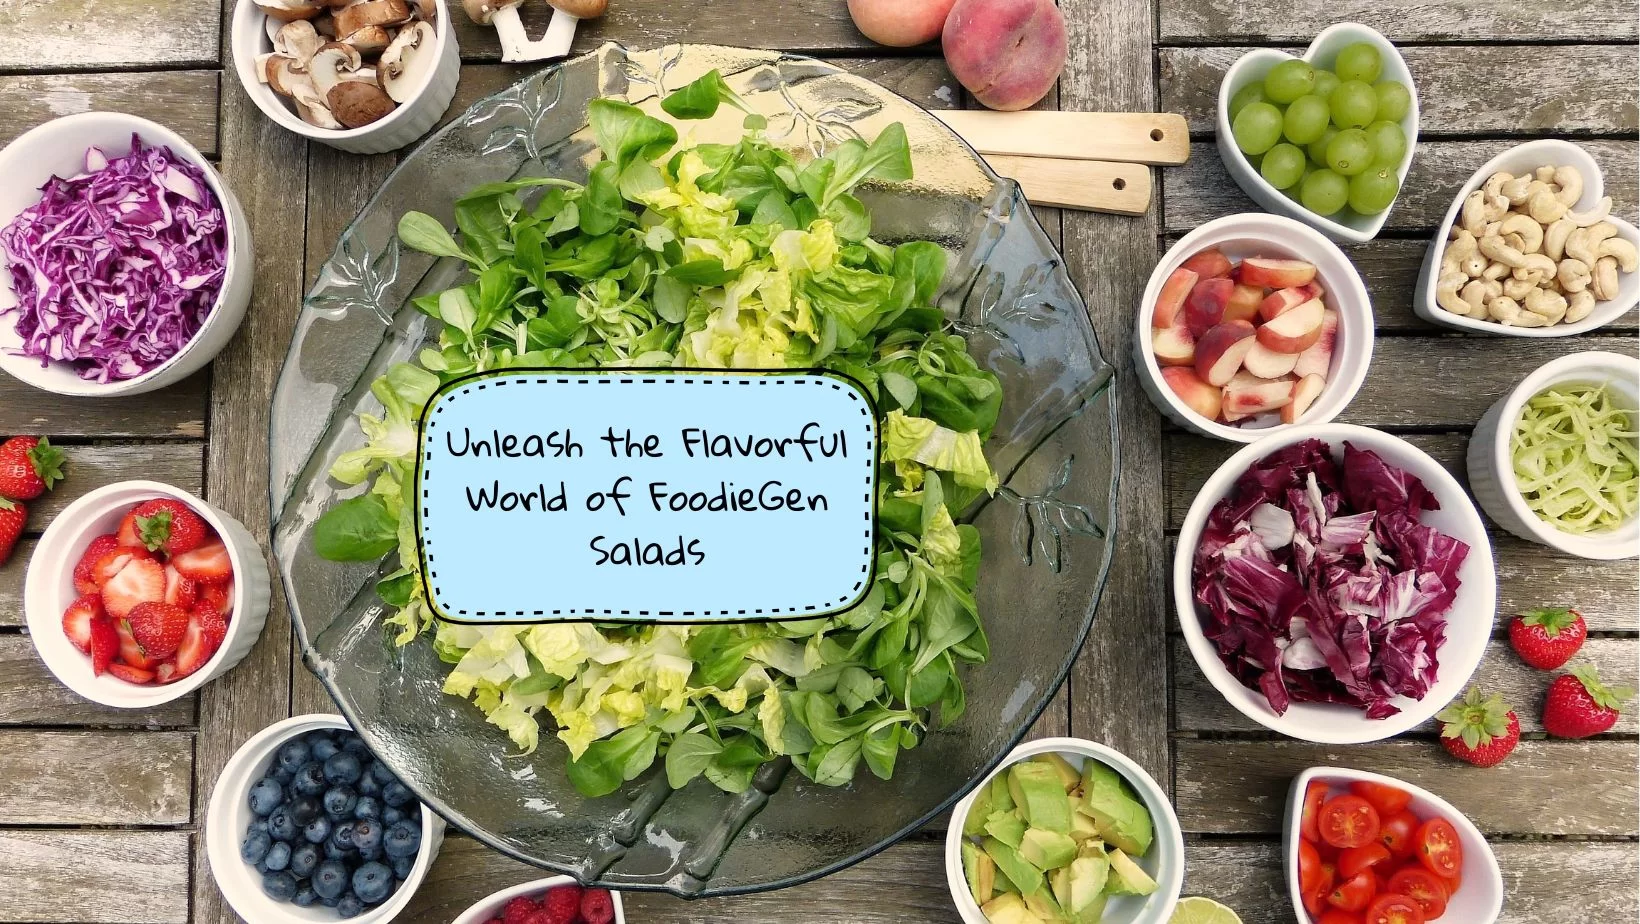 Unleash the Flavorful World of FoodieGen Salads